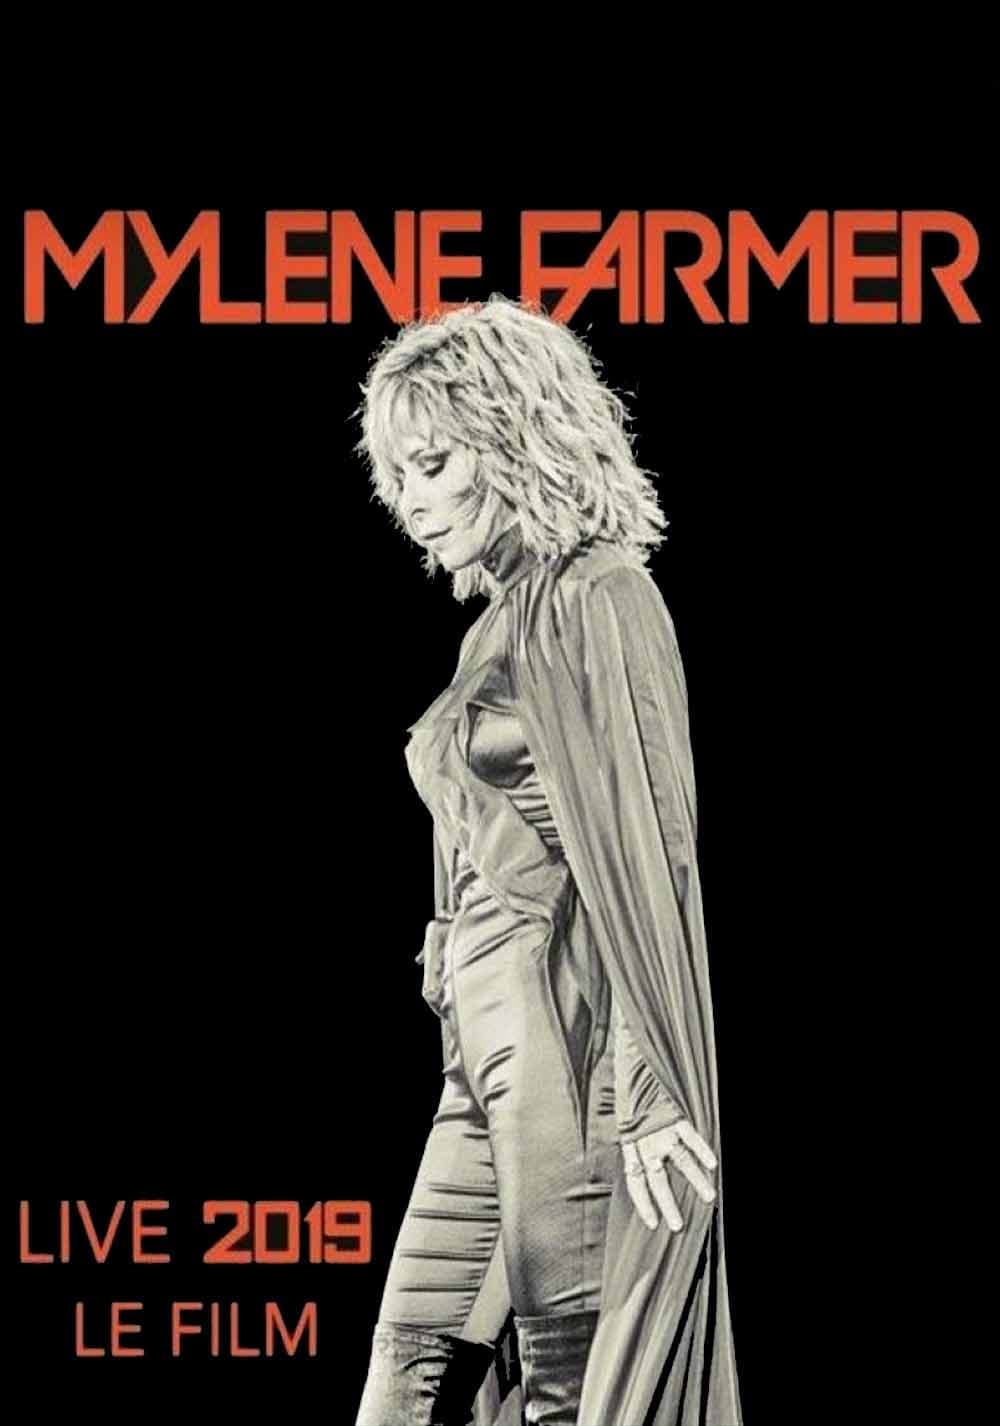 Mylène Farmer : Live 2019 - Le Film